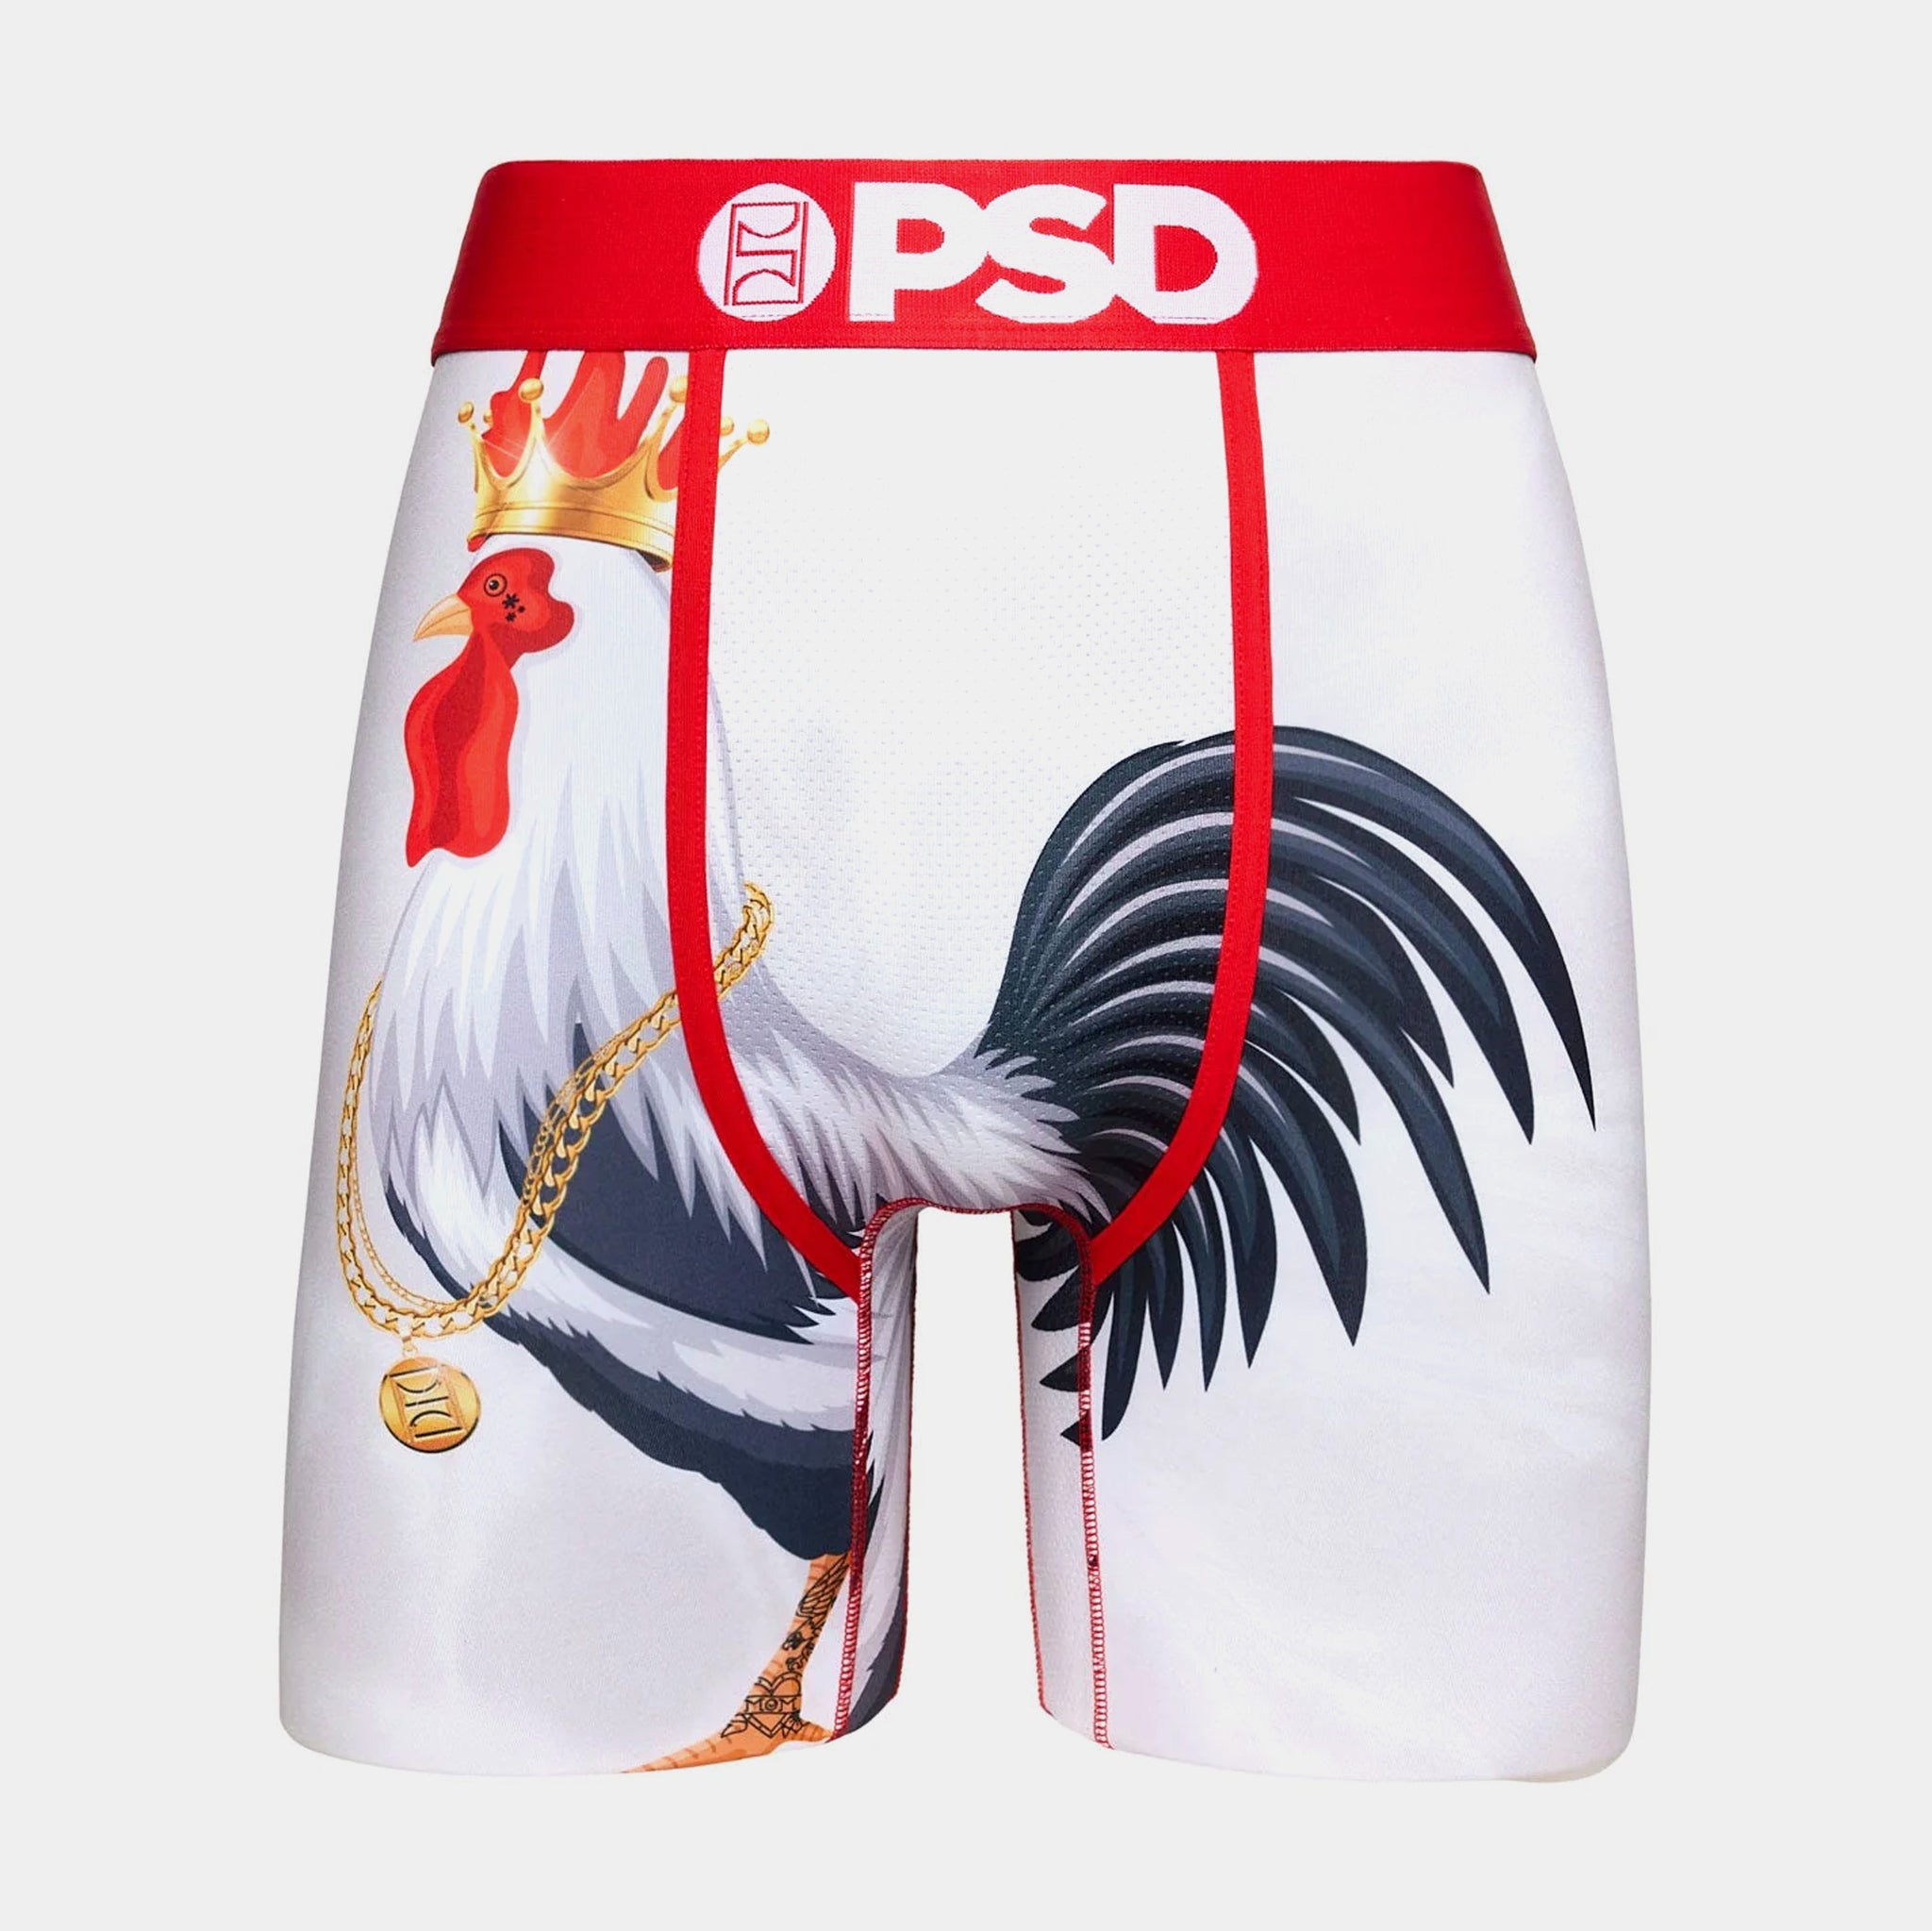 PSD, Underwear & Socks, Mens Psd Underwear